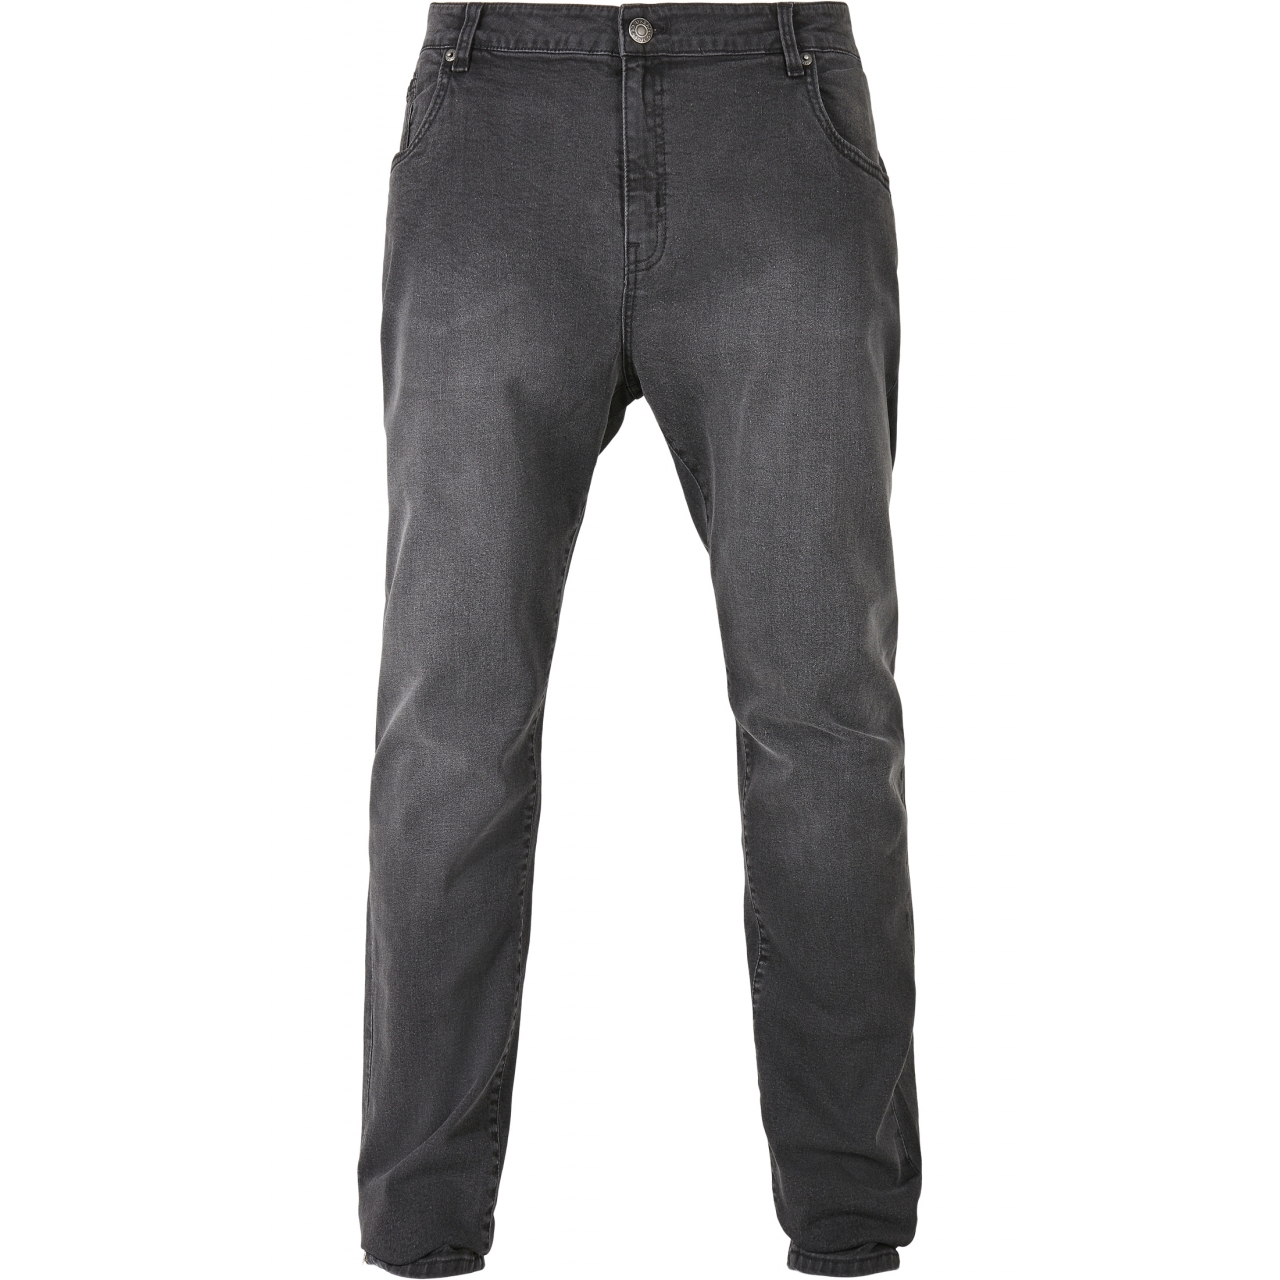 Džíny Urban Classics Slim Fit Zip Jeans - černé, 36/32